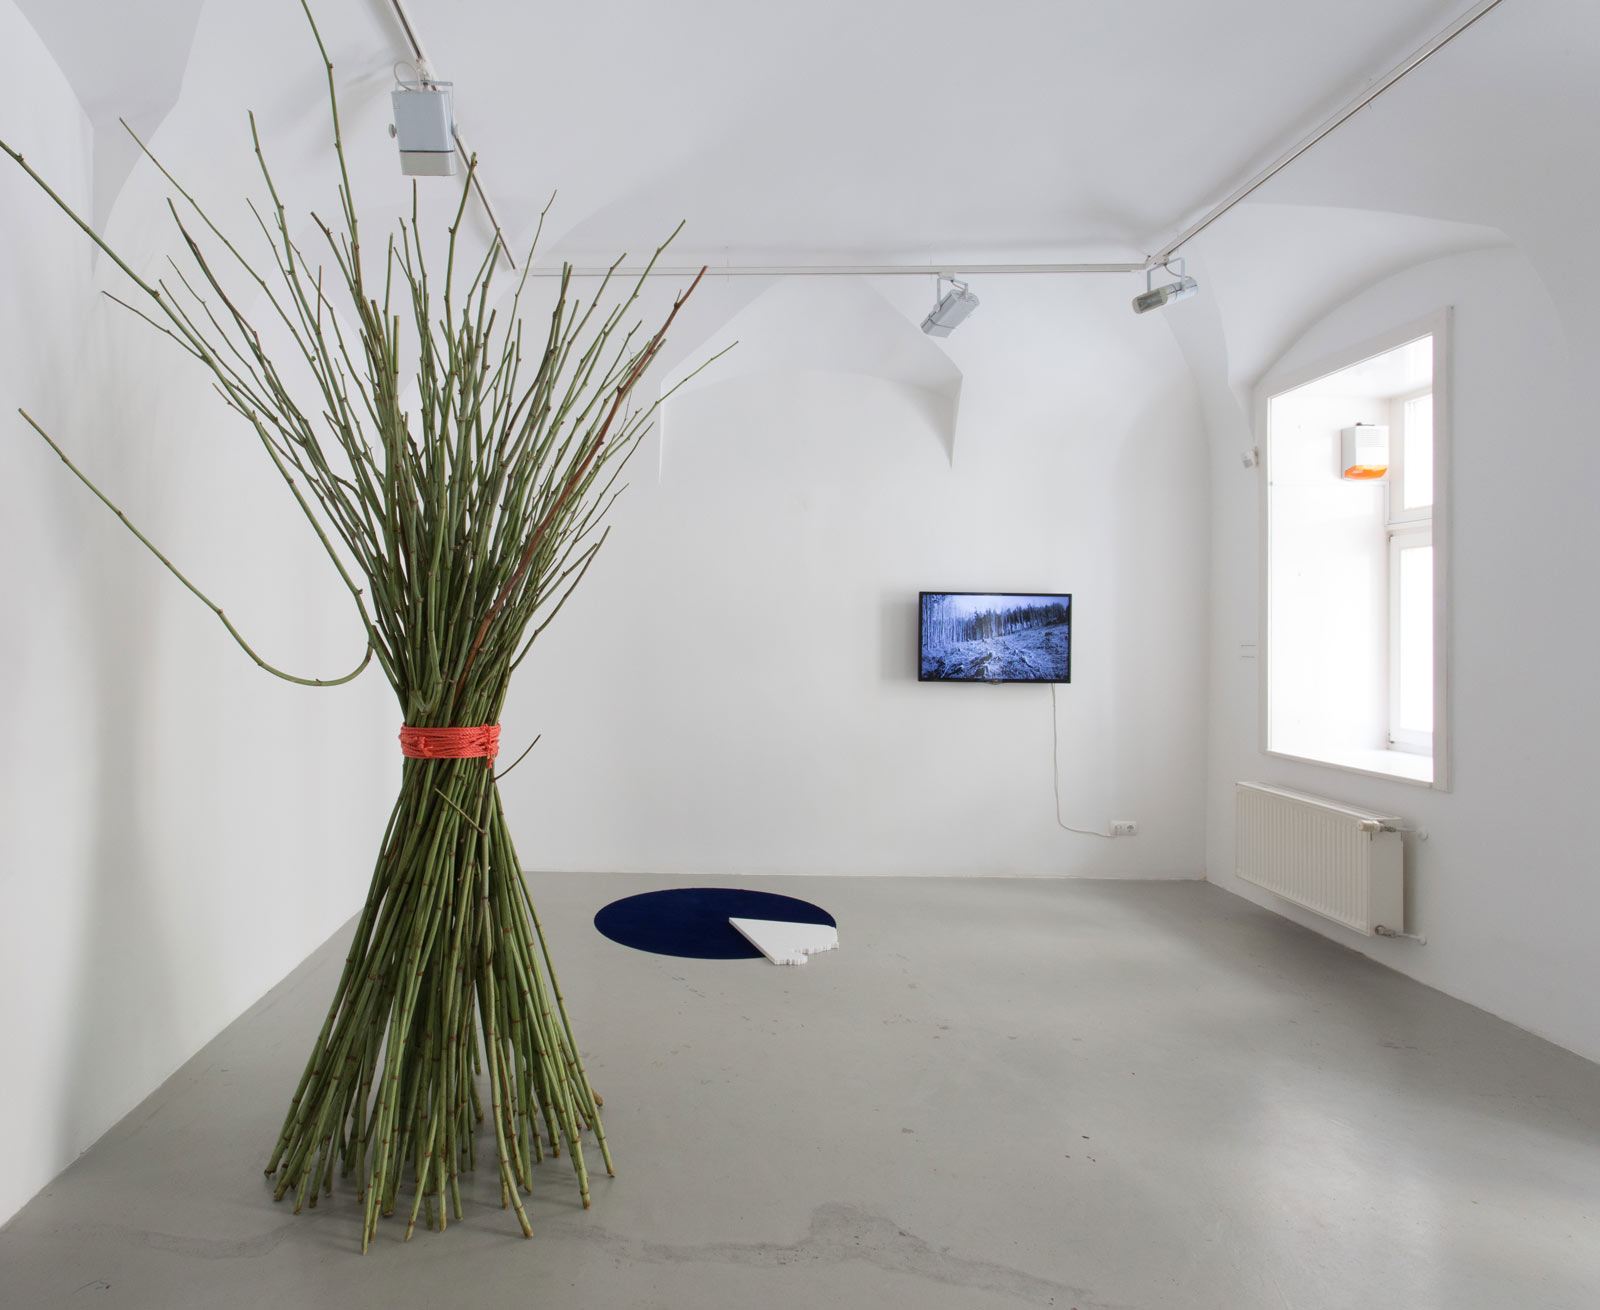 Installation view with works of Anca BENERA, Arnold ESTEFÁN, Kitti GOSZTOLA and Bence György PÁLINKÁS, Kisterem, 2018